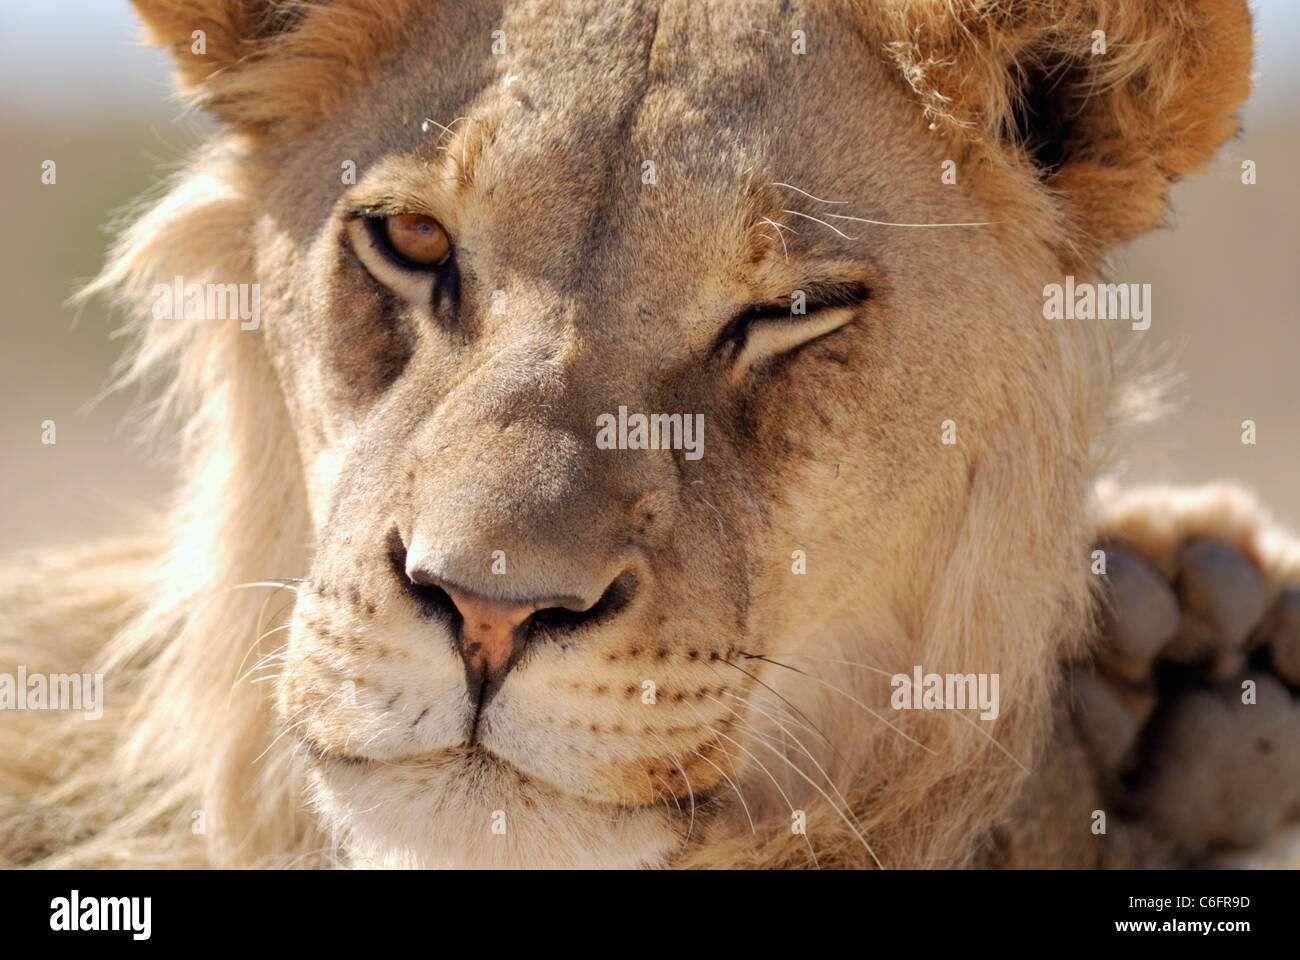 Lion (Panthera leo) winking, Kgalagadi Transfrontier Park, South Africa Stock Photo